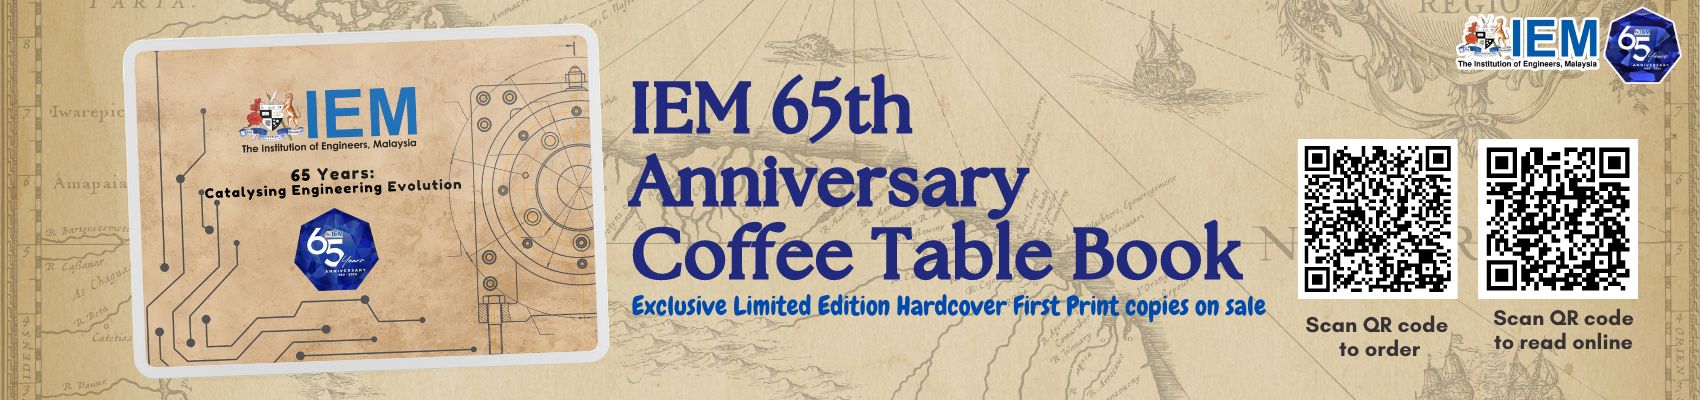 IEM 65th Anniversary Coffee Table Book